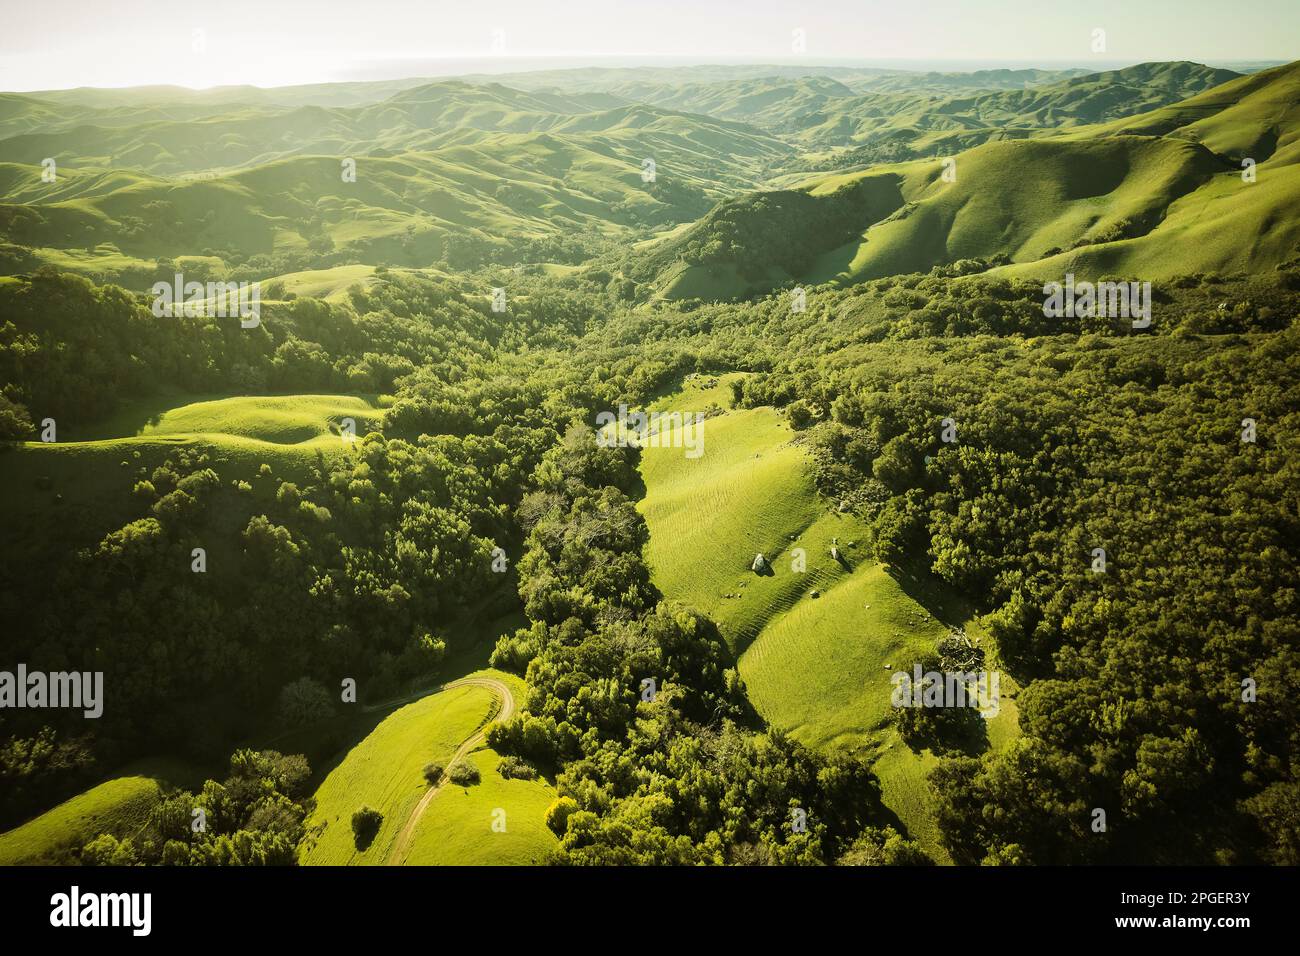 California Santa Lucia Landscape. United States of America. Aerial Photo. Stock Photo